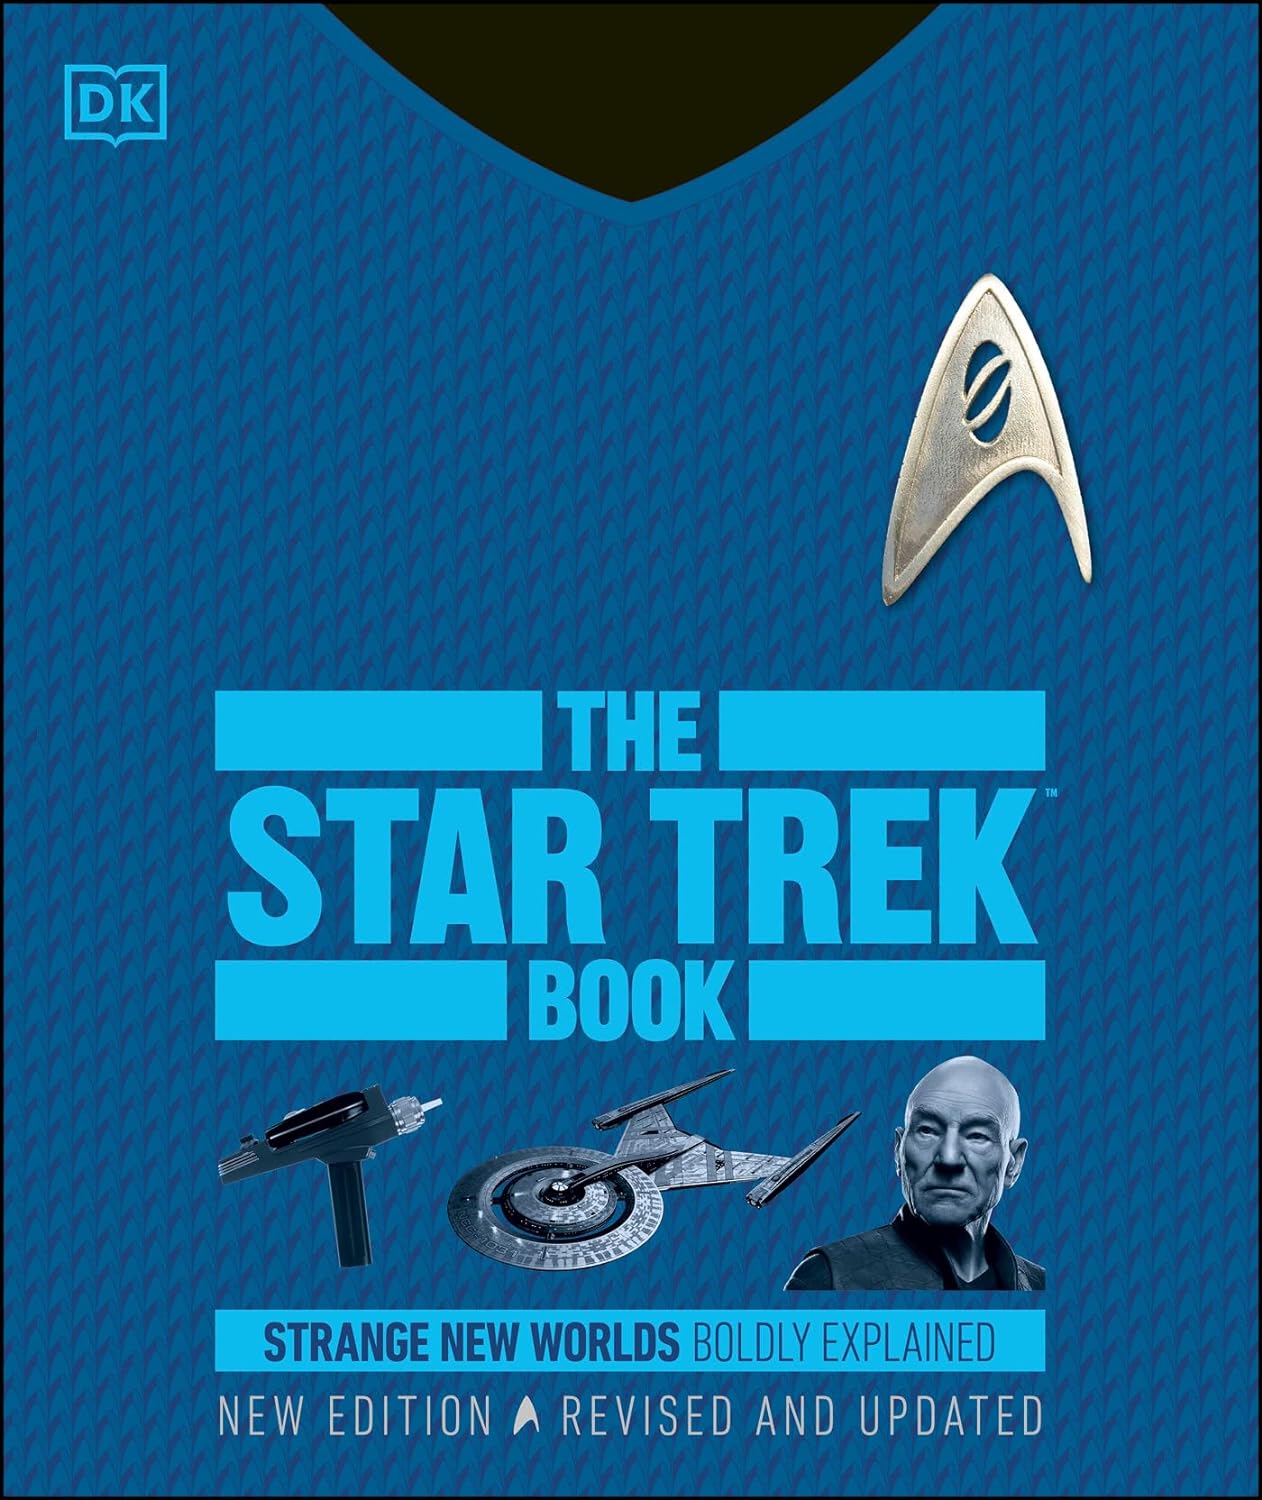 The Star Trek Book: New Edition (Kindle Digital Download) $2